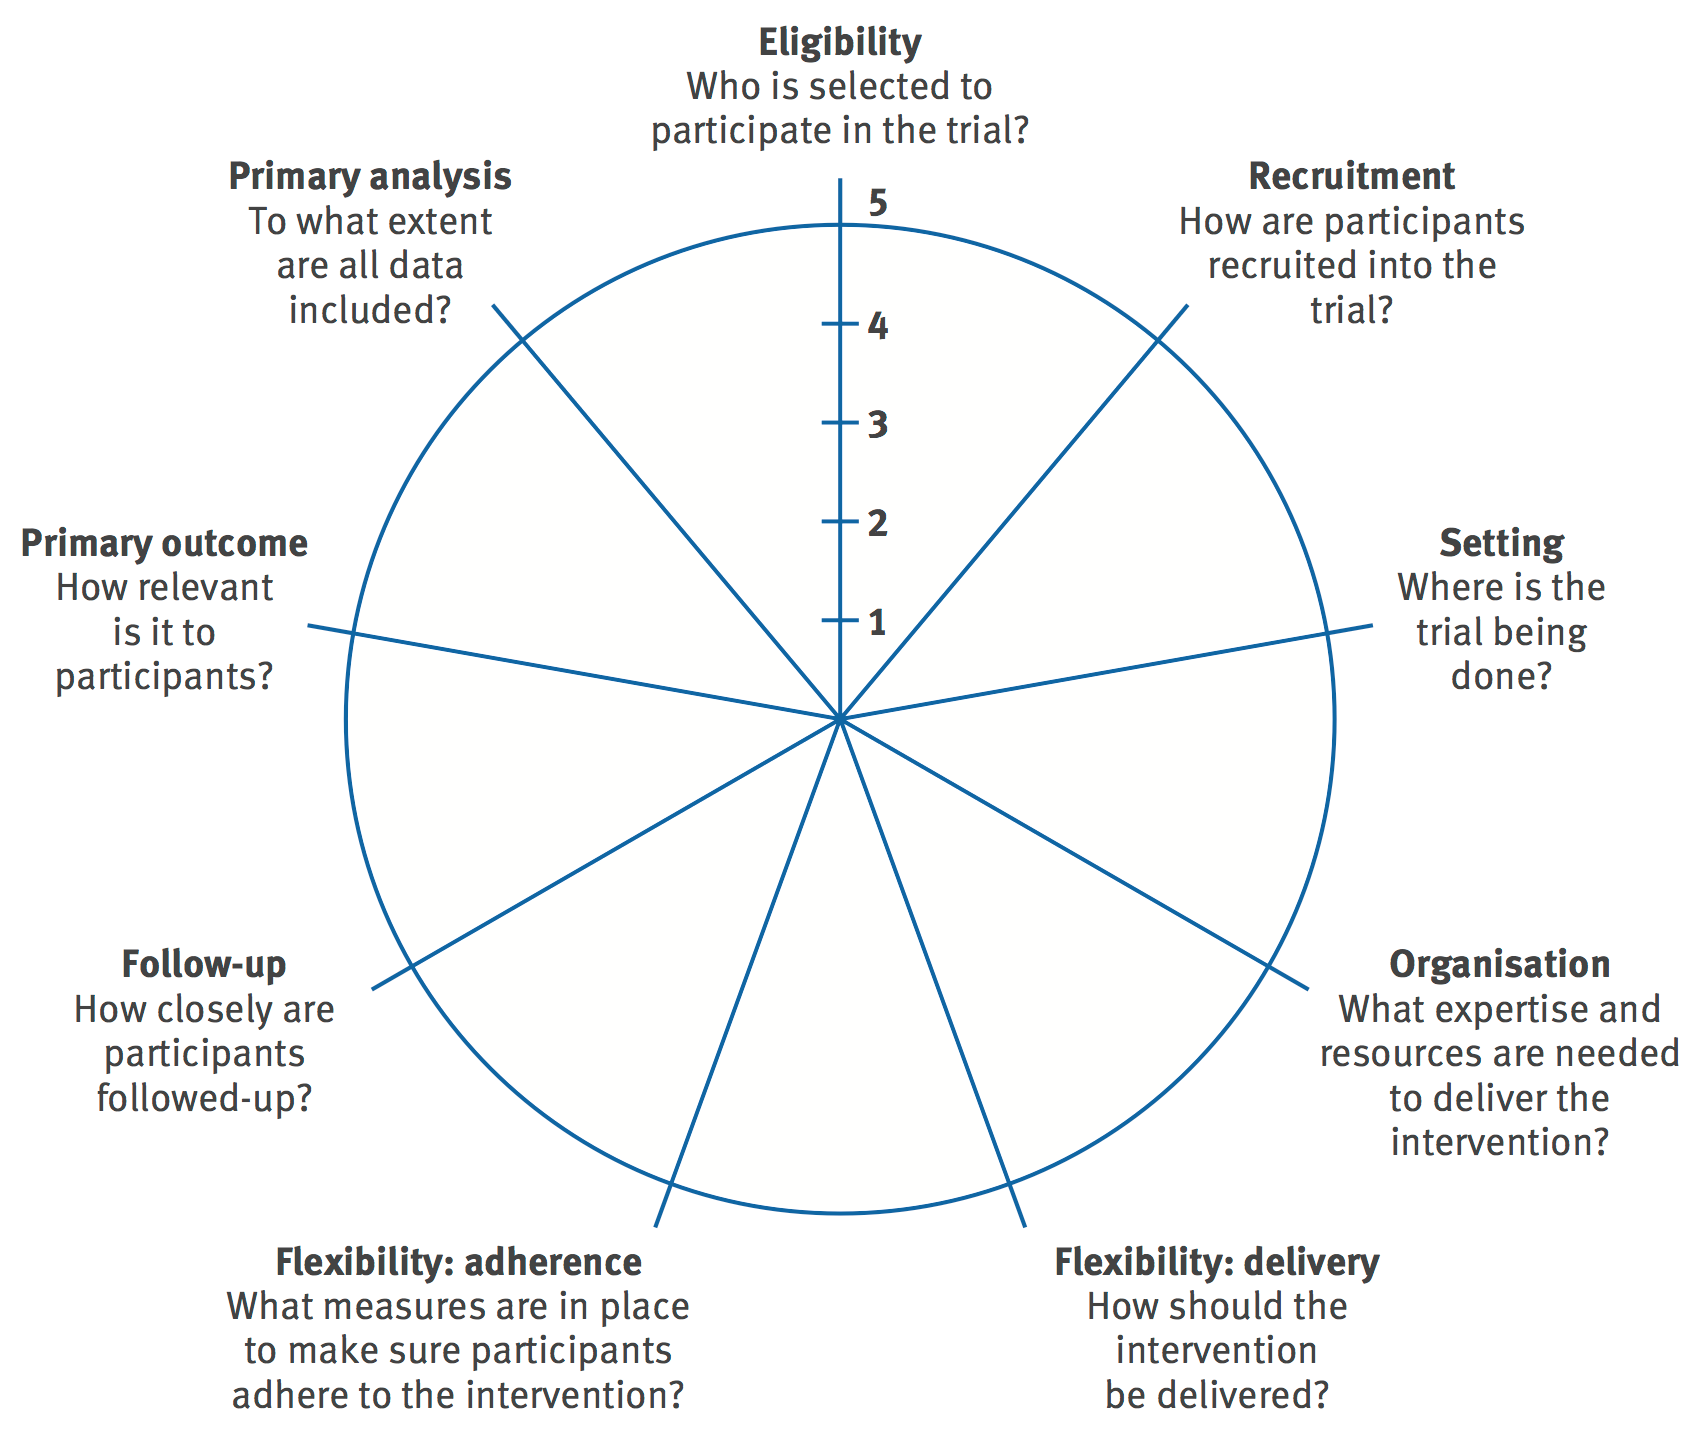 The PRECIS wheel